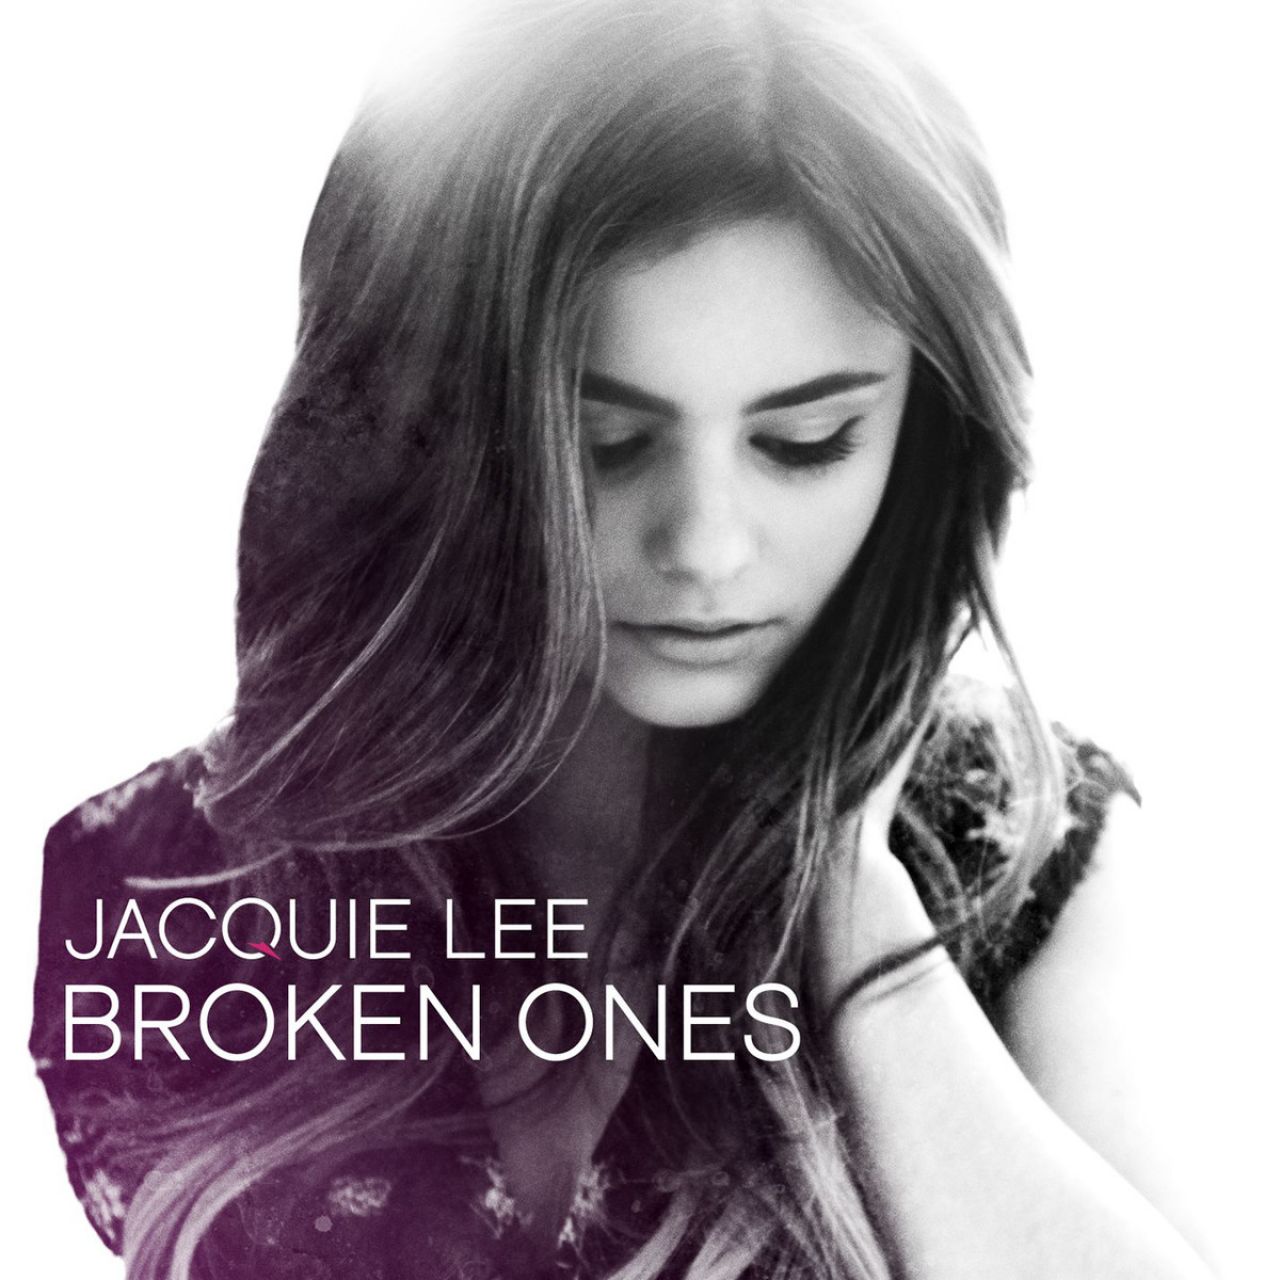 jacquie-lee-broken-ones-single-cover-2014_1.jpg